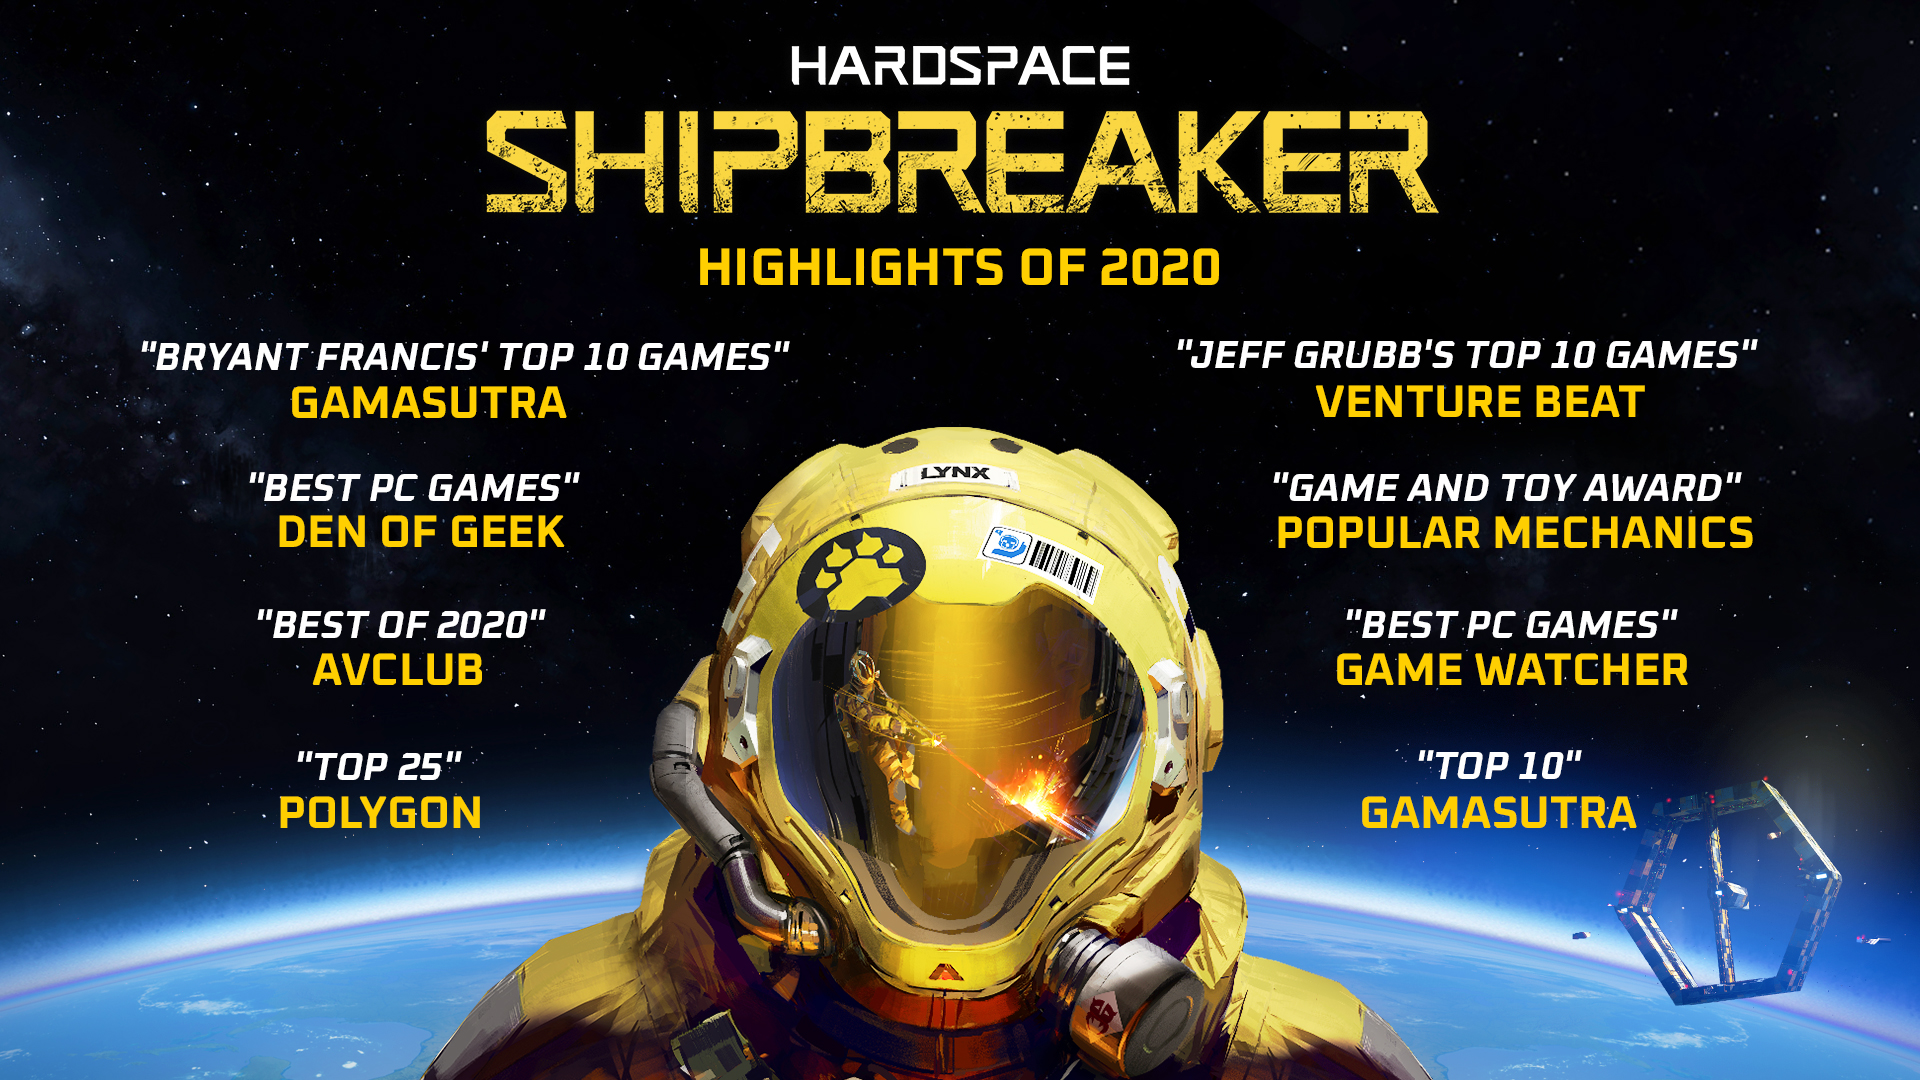 HardspaceShipbreaker_1920x1080_Highlights-of-2020